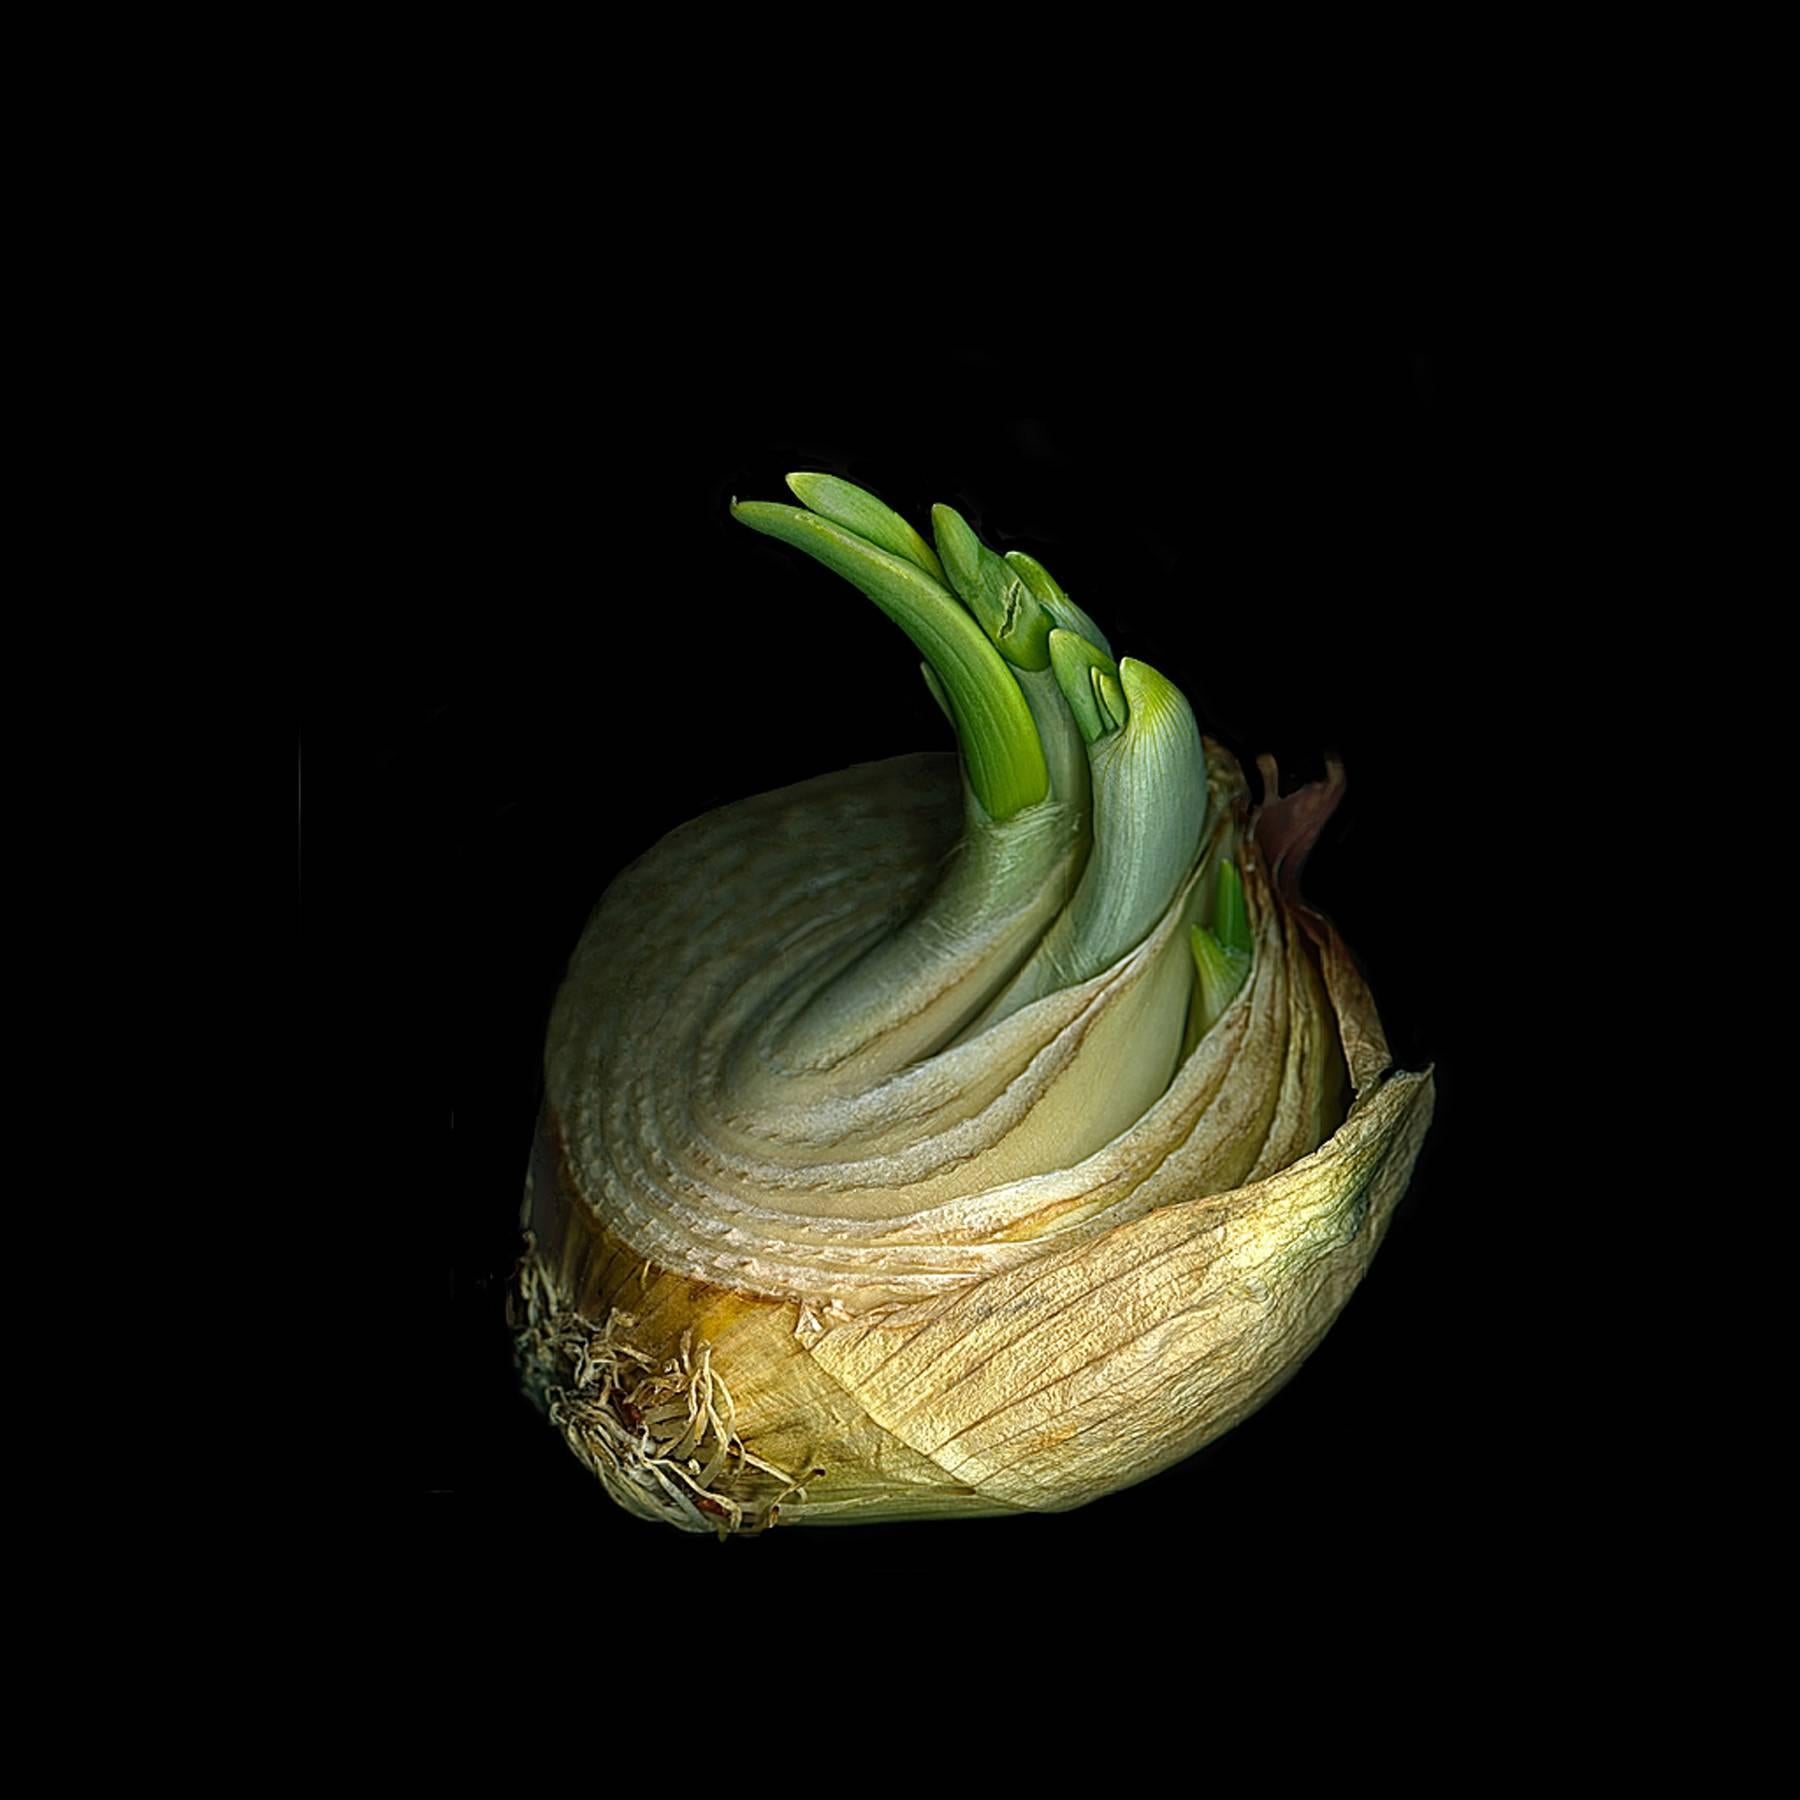 Jerry Freedner Still-Life Photograph - Onion 1 (Vegetable Still Life Photograph of Green Bulb on Black Background)